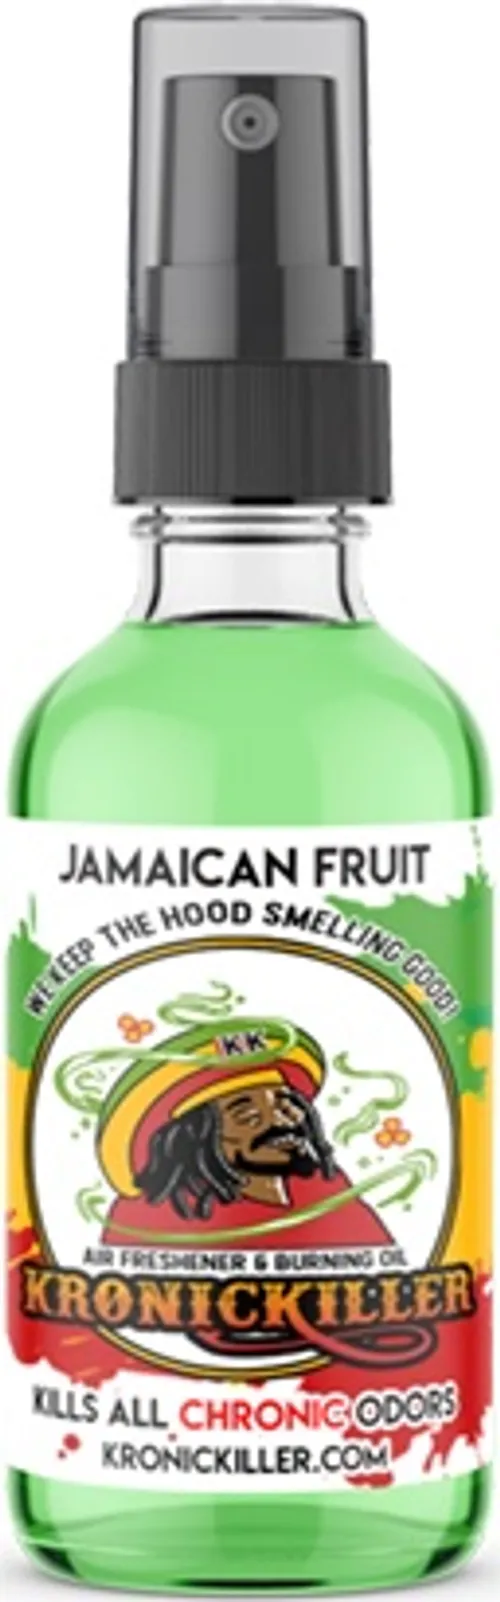 Kronickiller - Jamaican Fruit